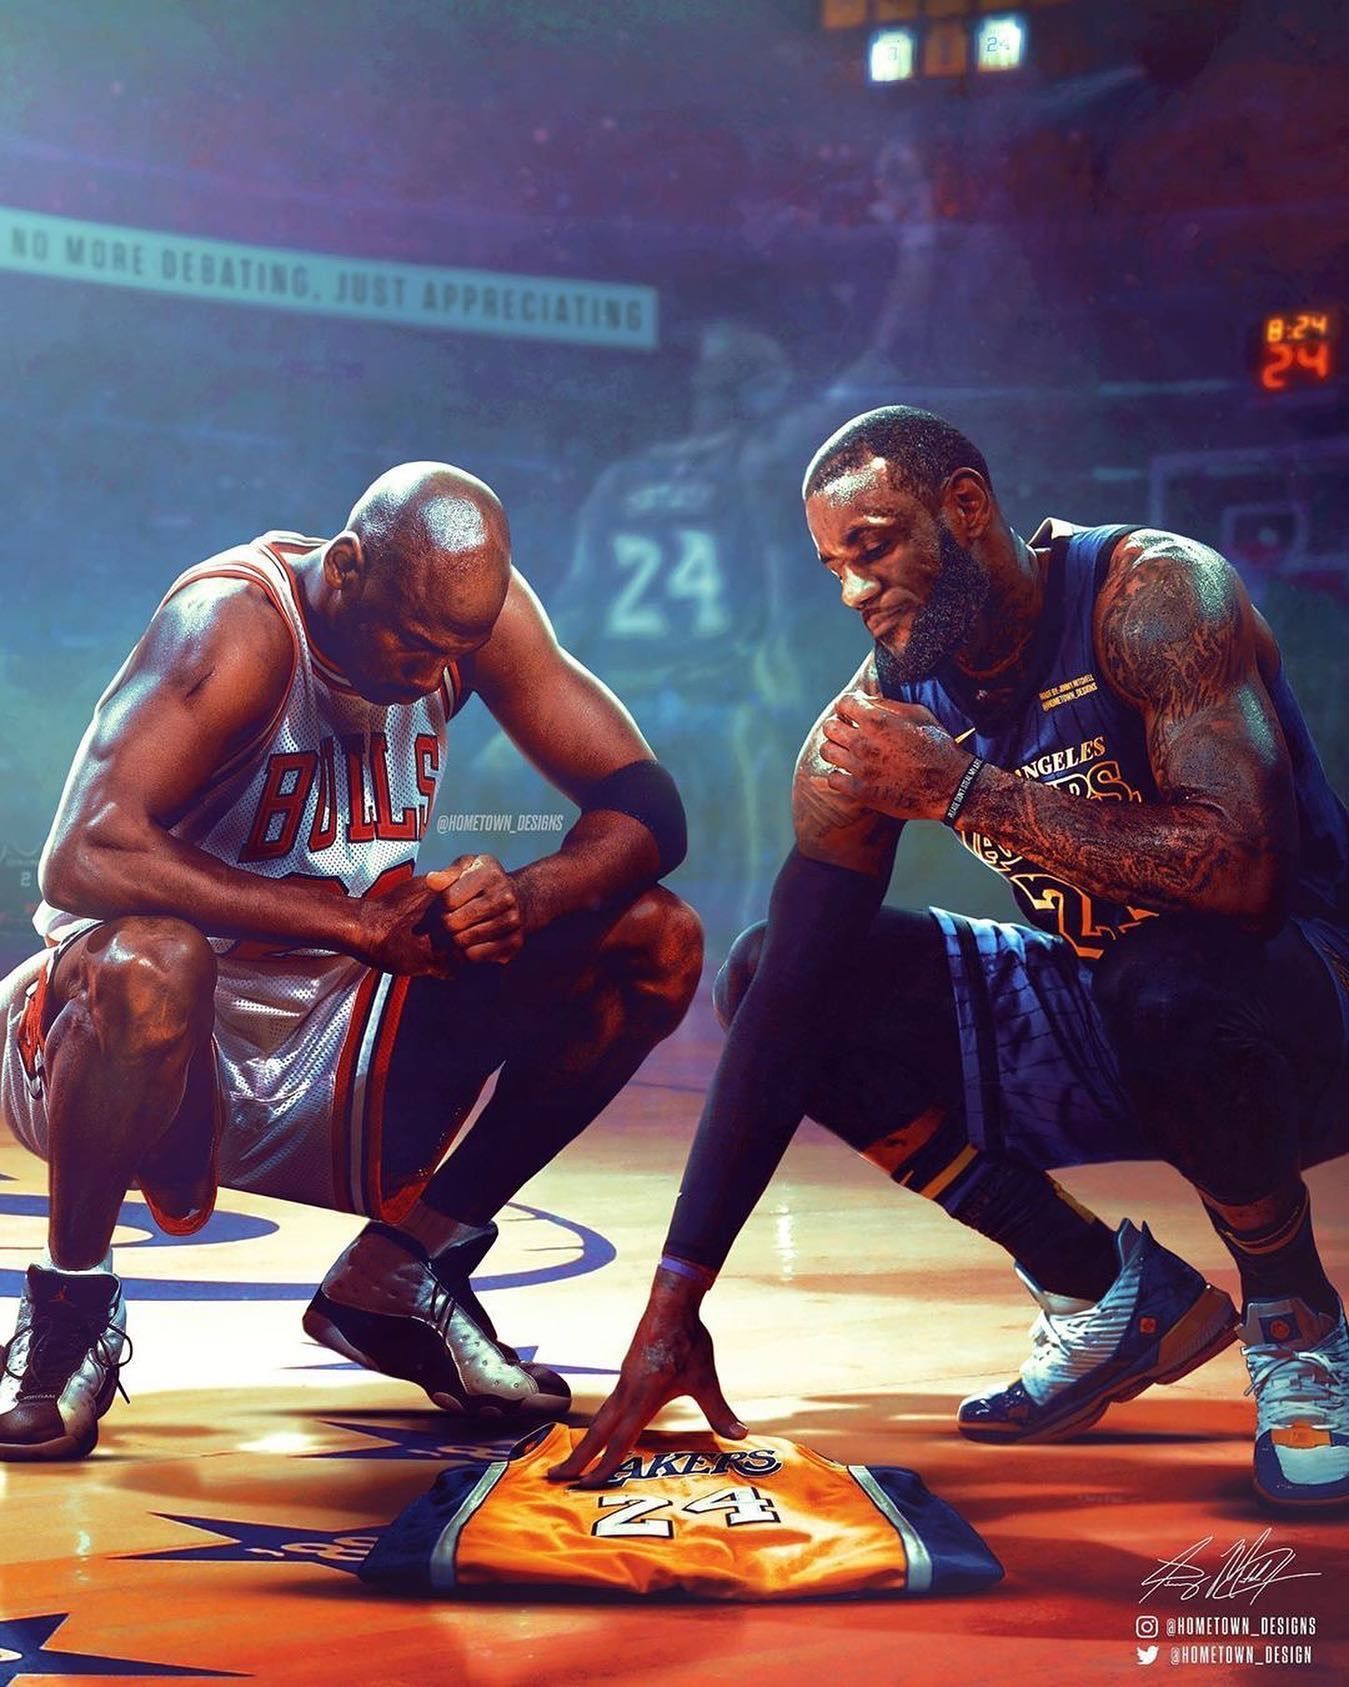 NBA Zone. Kobe bryant picture, Kobe bryant poster, Kobe bryant nba